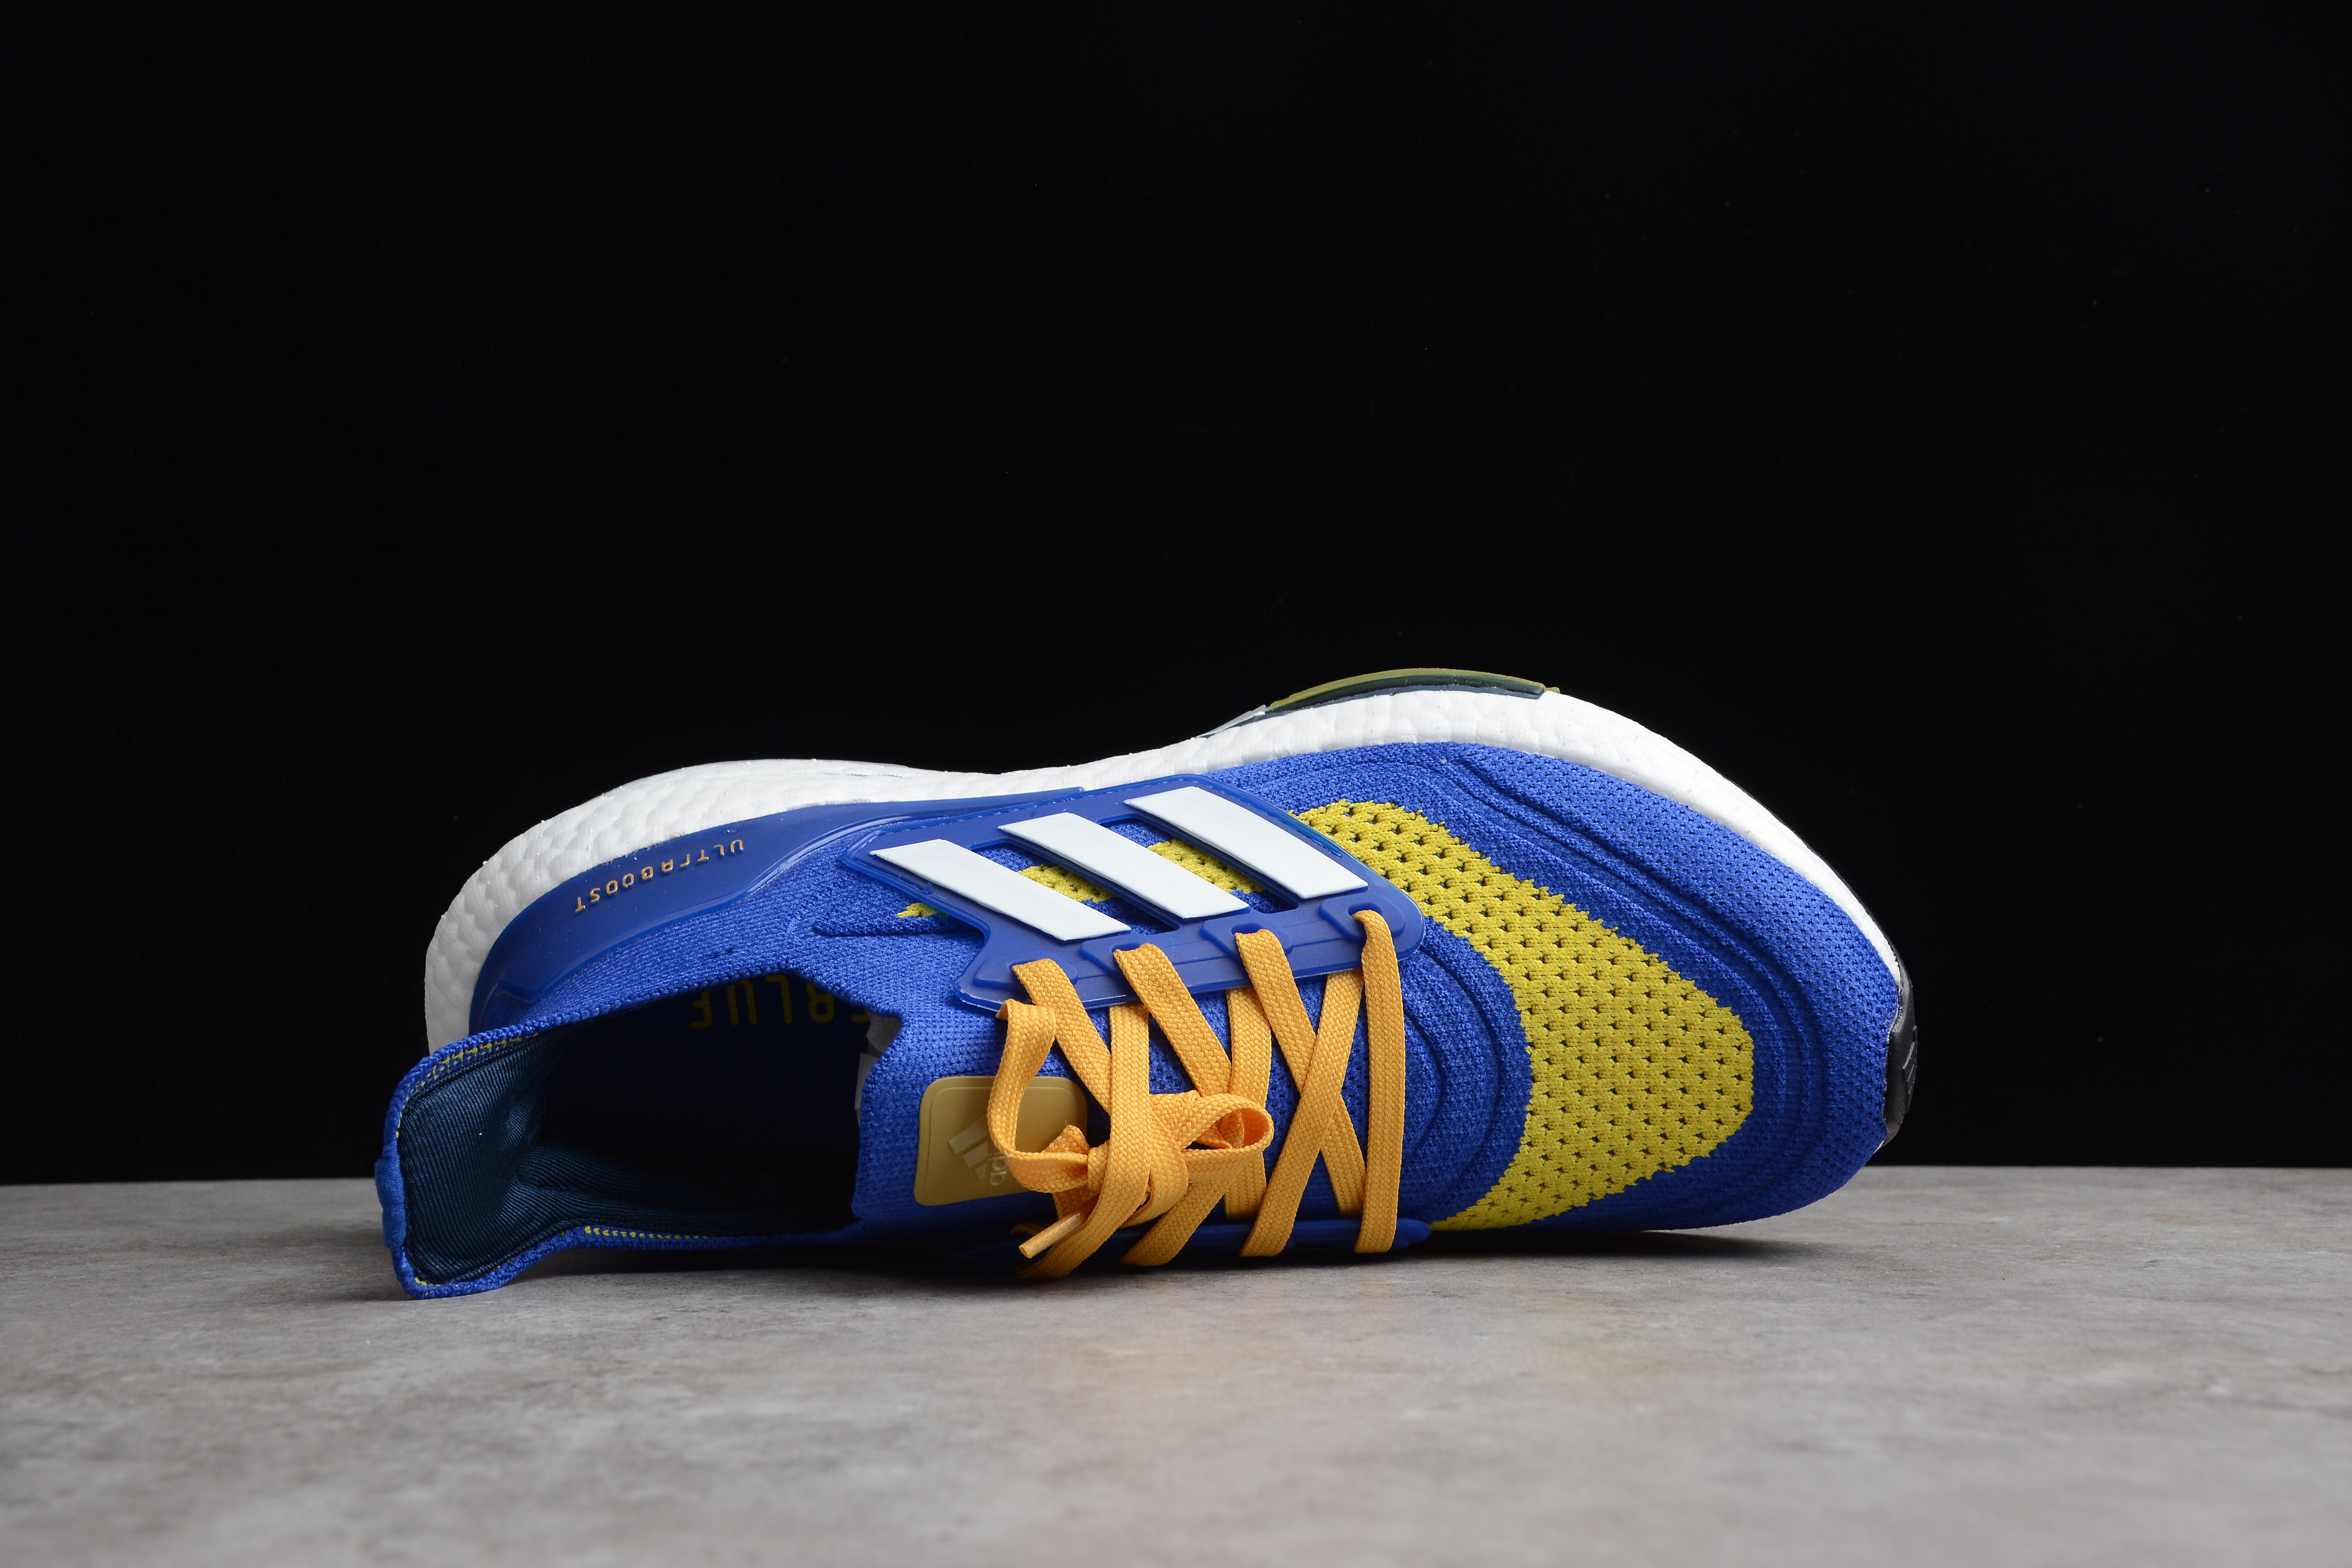 Adidas ultra boost Royal blue shoes